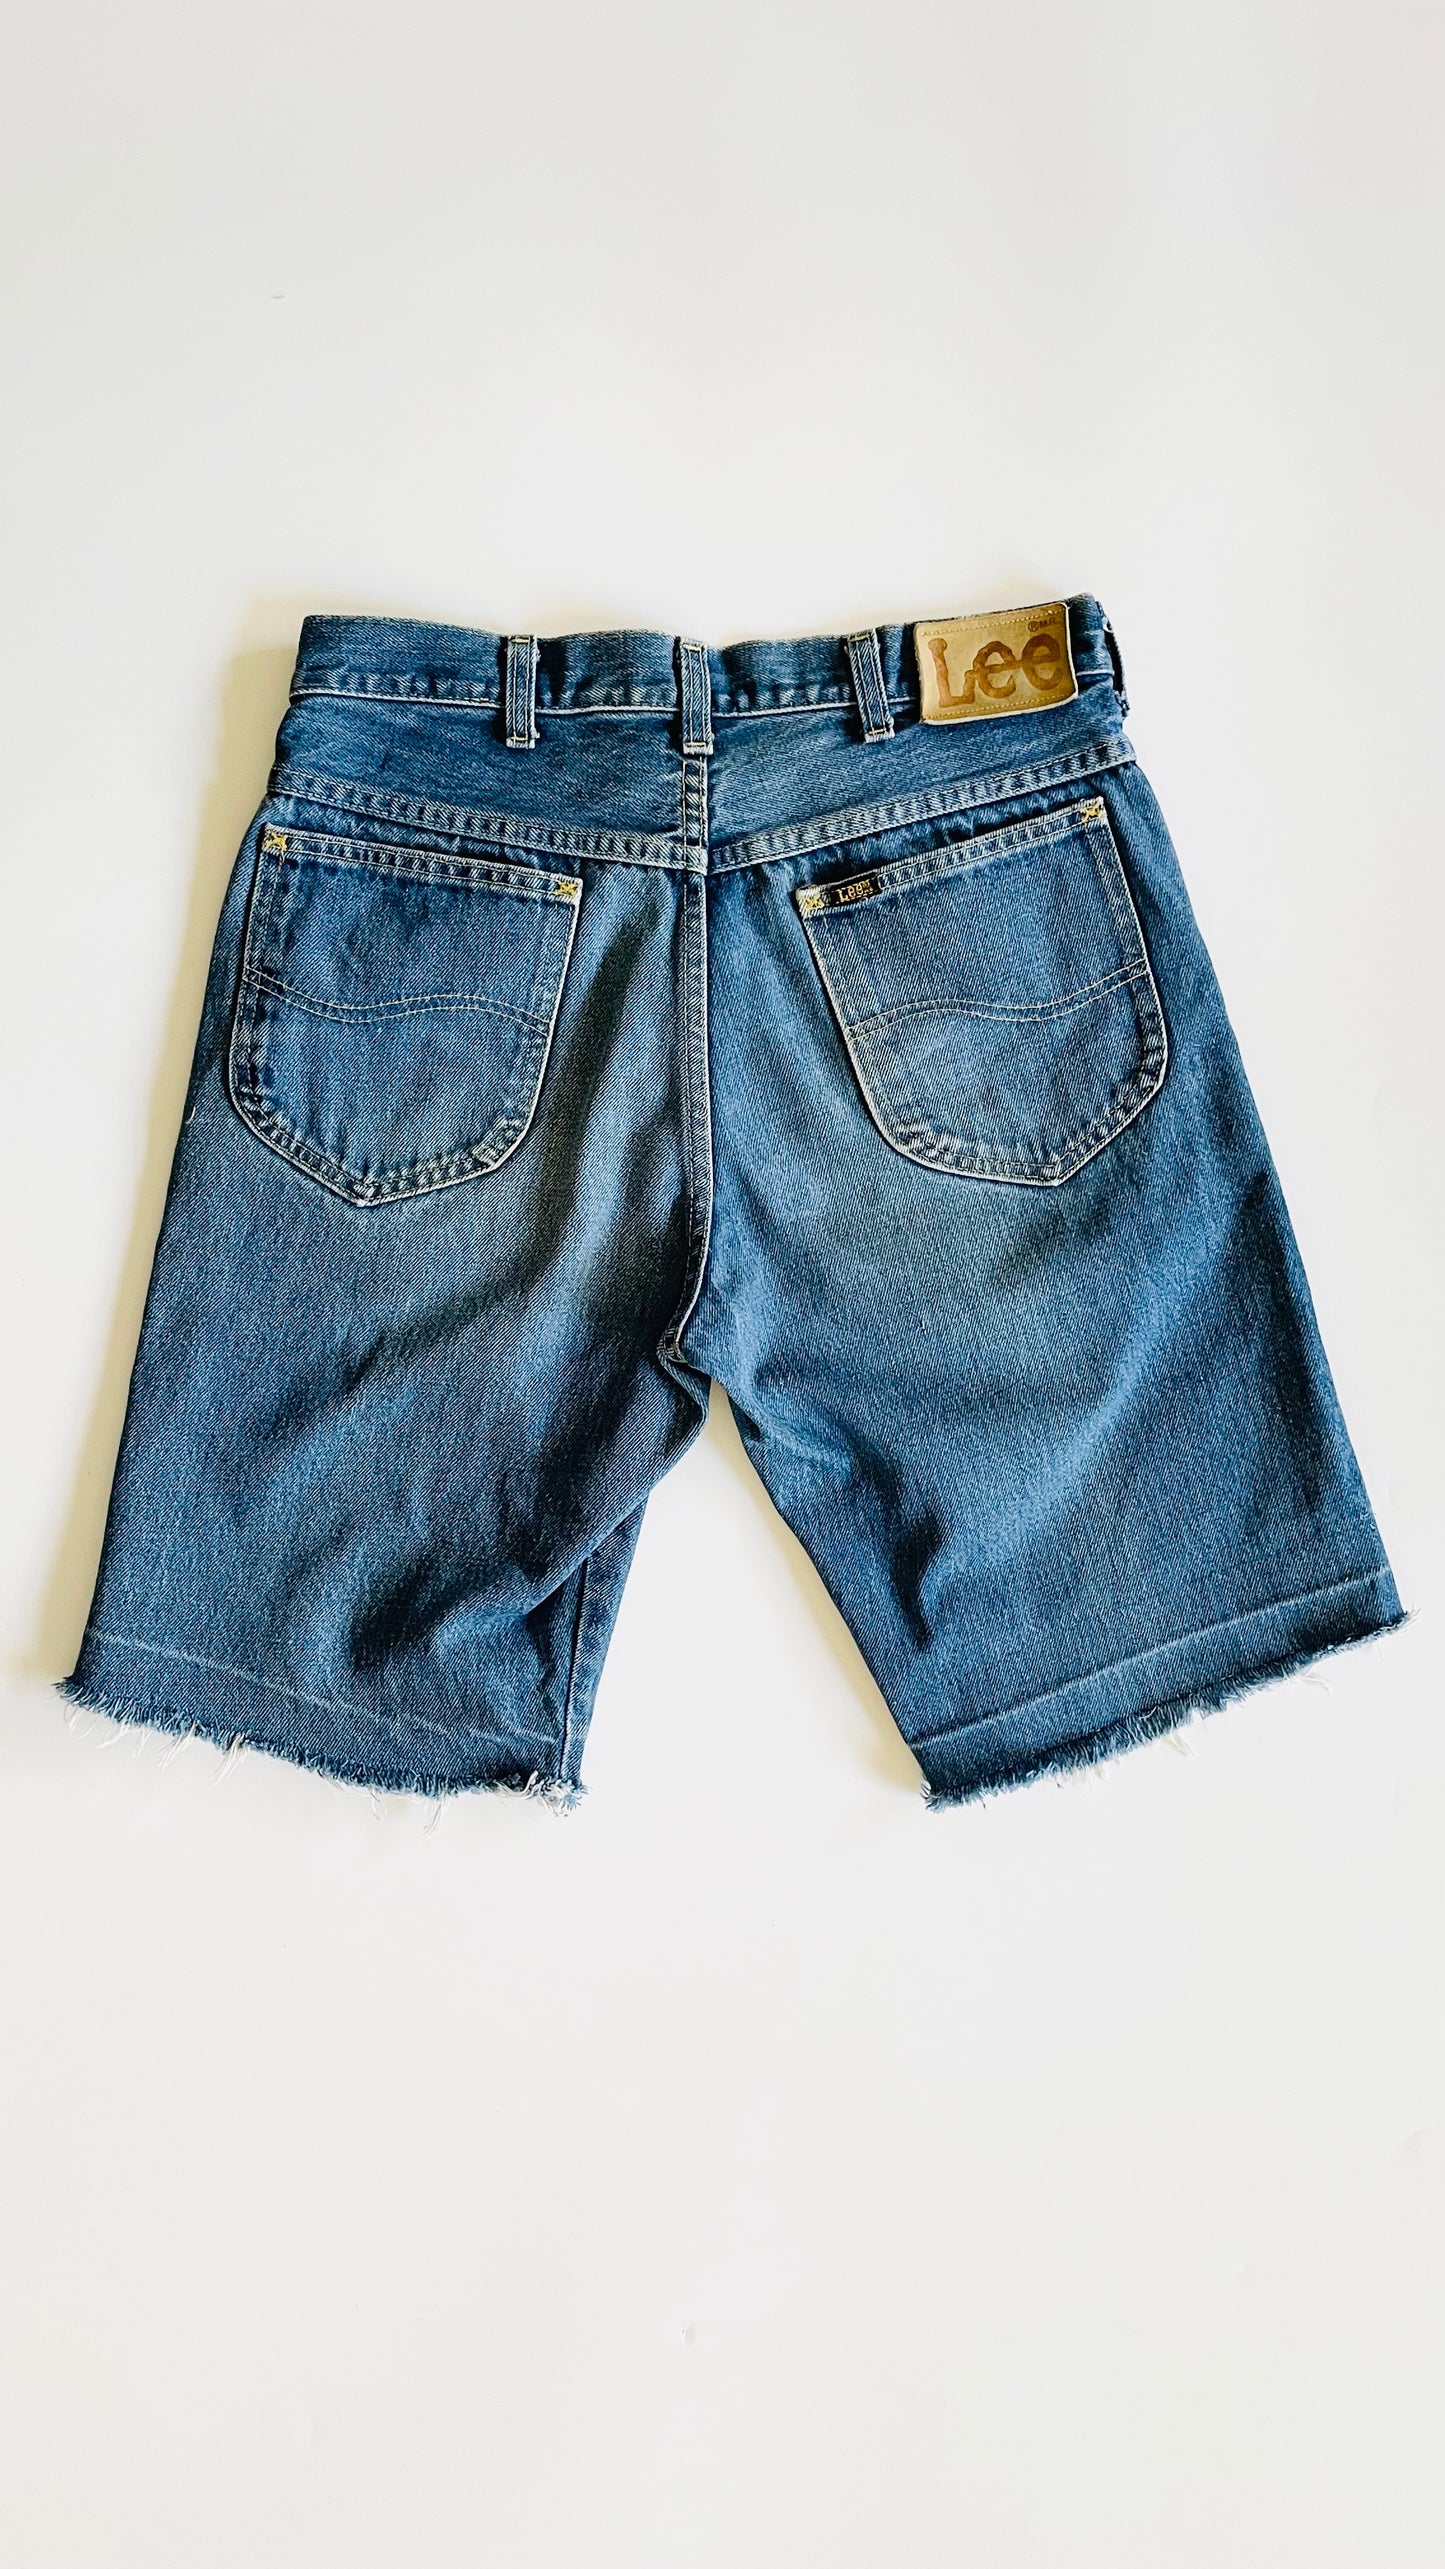 Vintage LEE blue jean shorts - Size 32